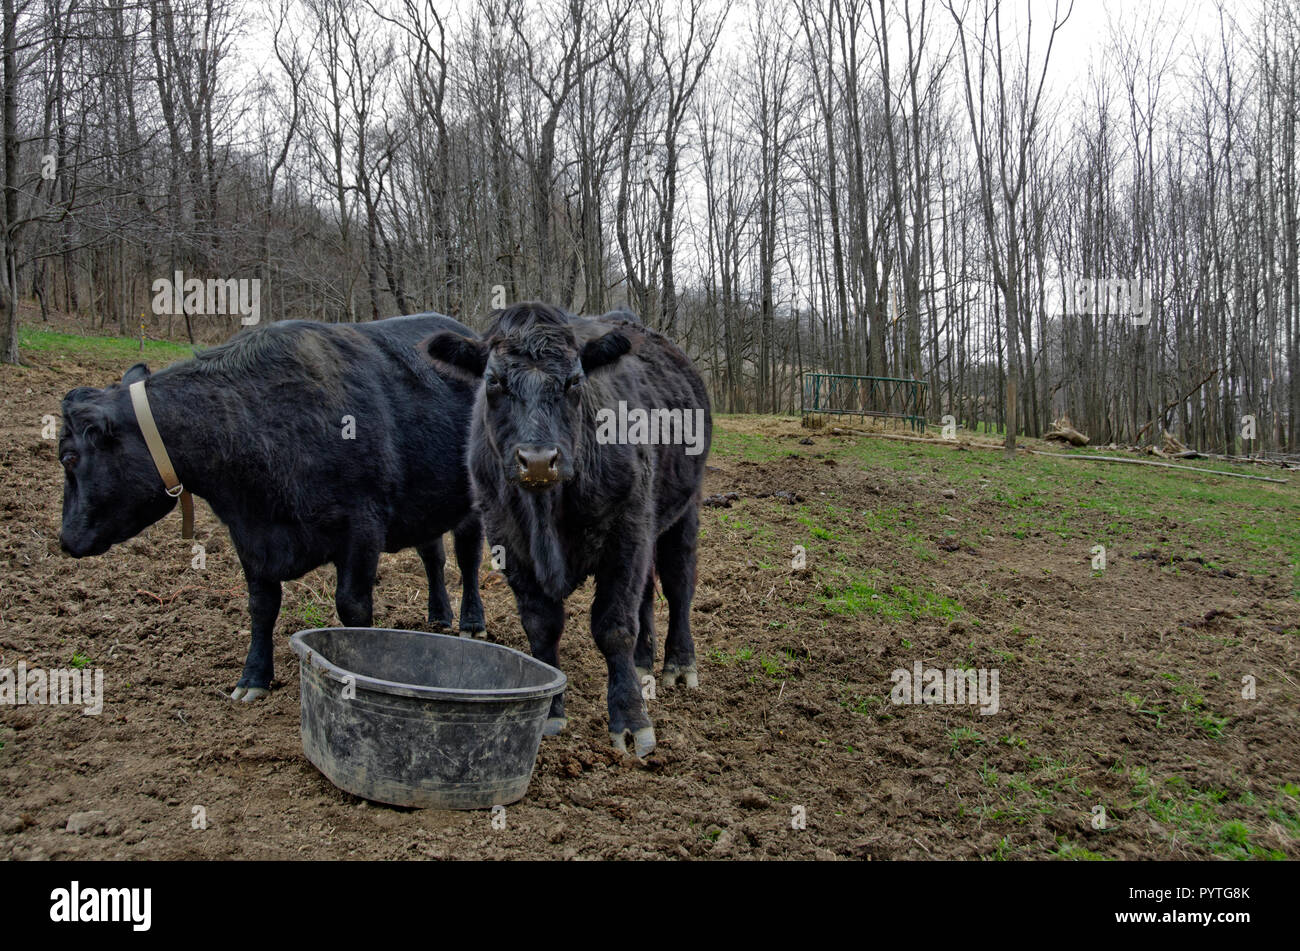 Two bulls standing near a feeding bucket Stock Photo